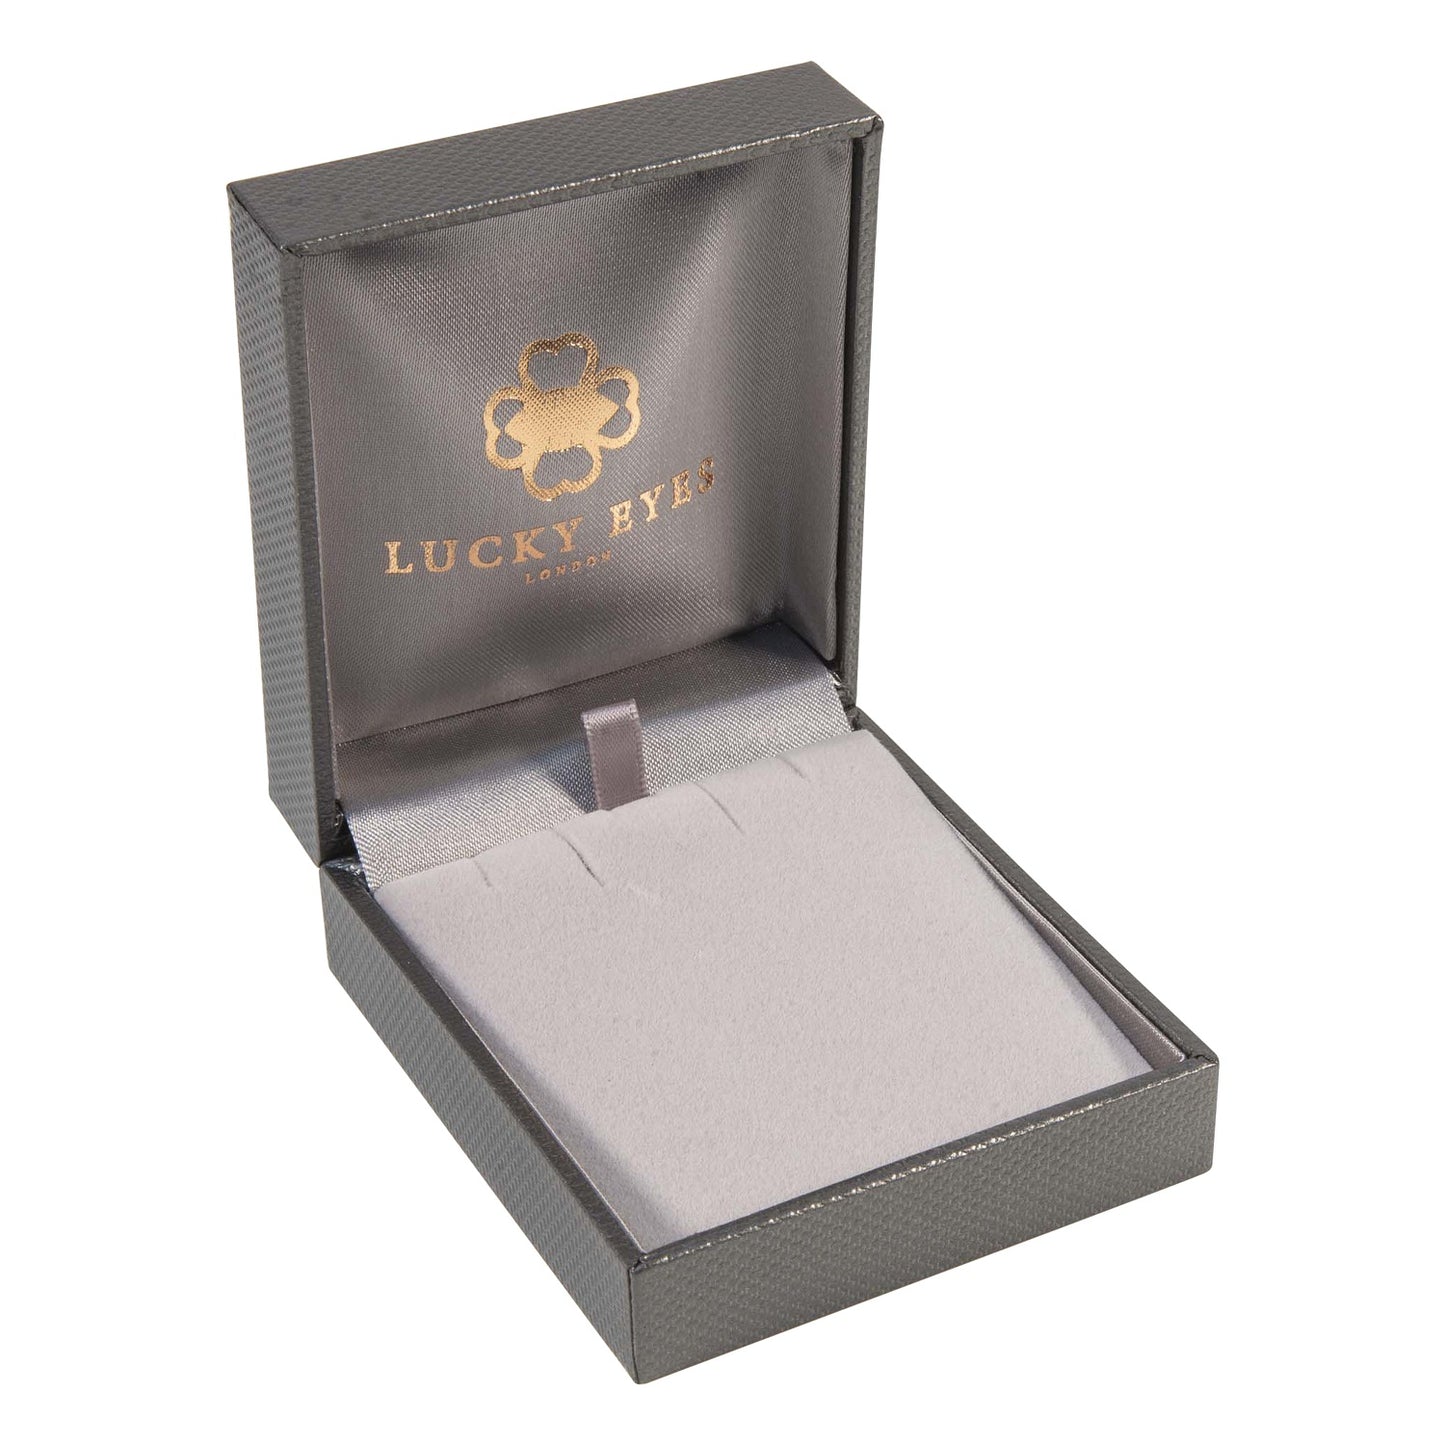 Quatrefoil flower crystal drop earrings - Luxury Gift Box